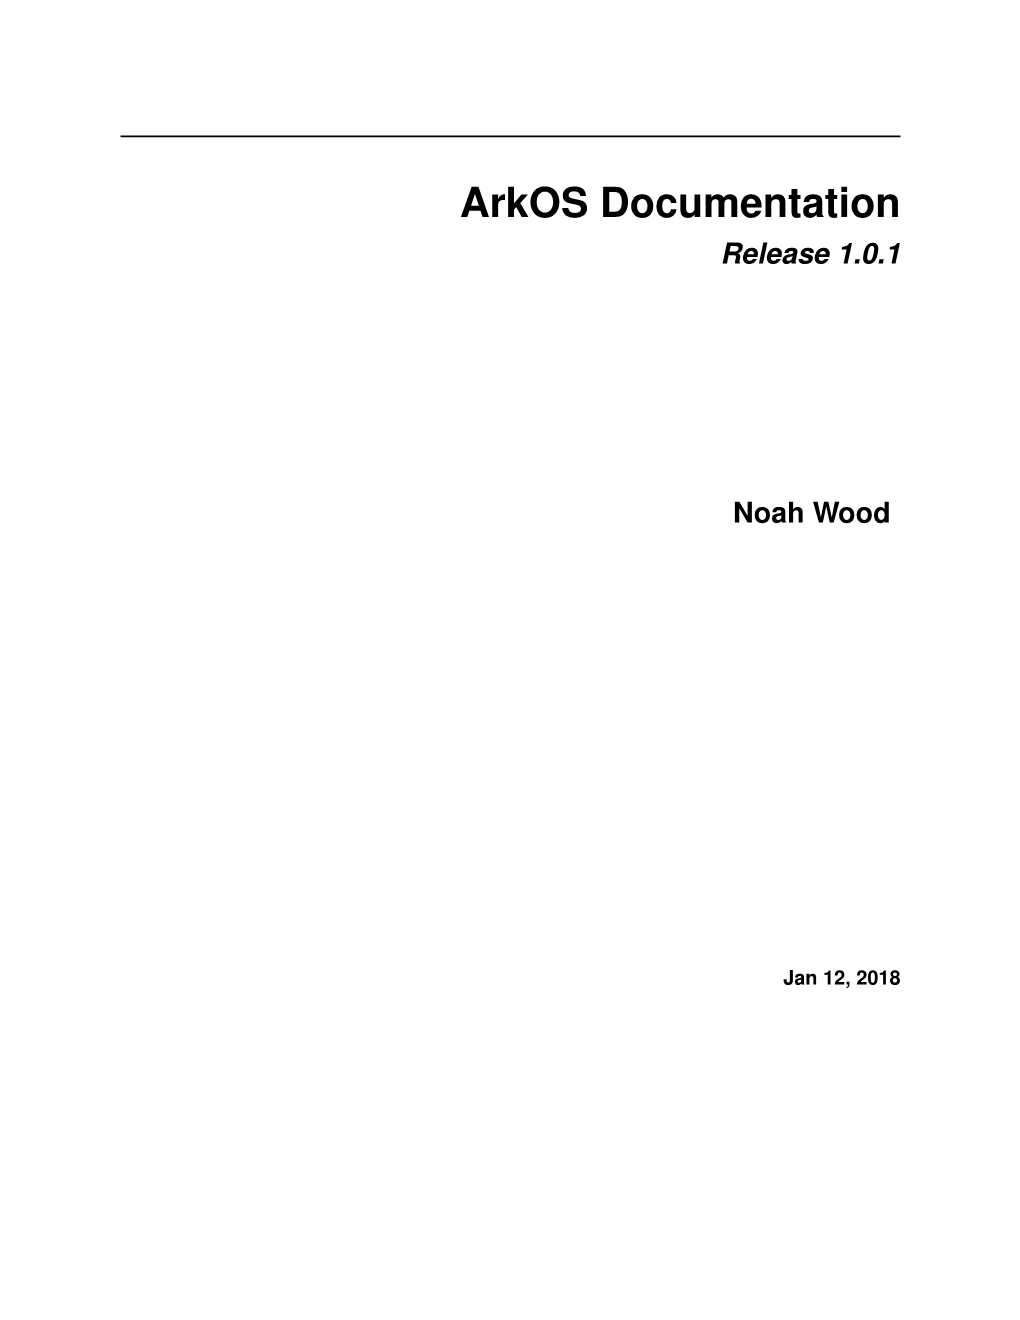 Arkos Documentation Release 1.0.1